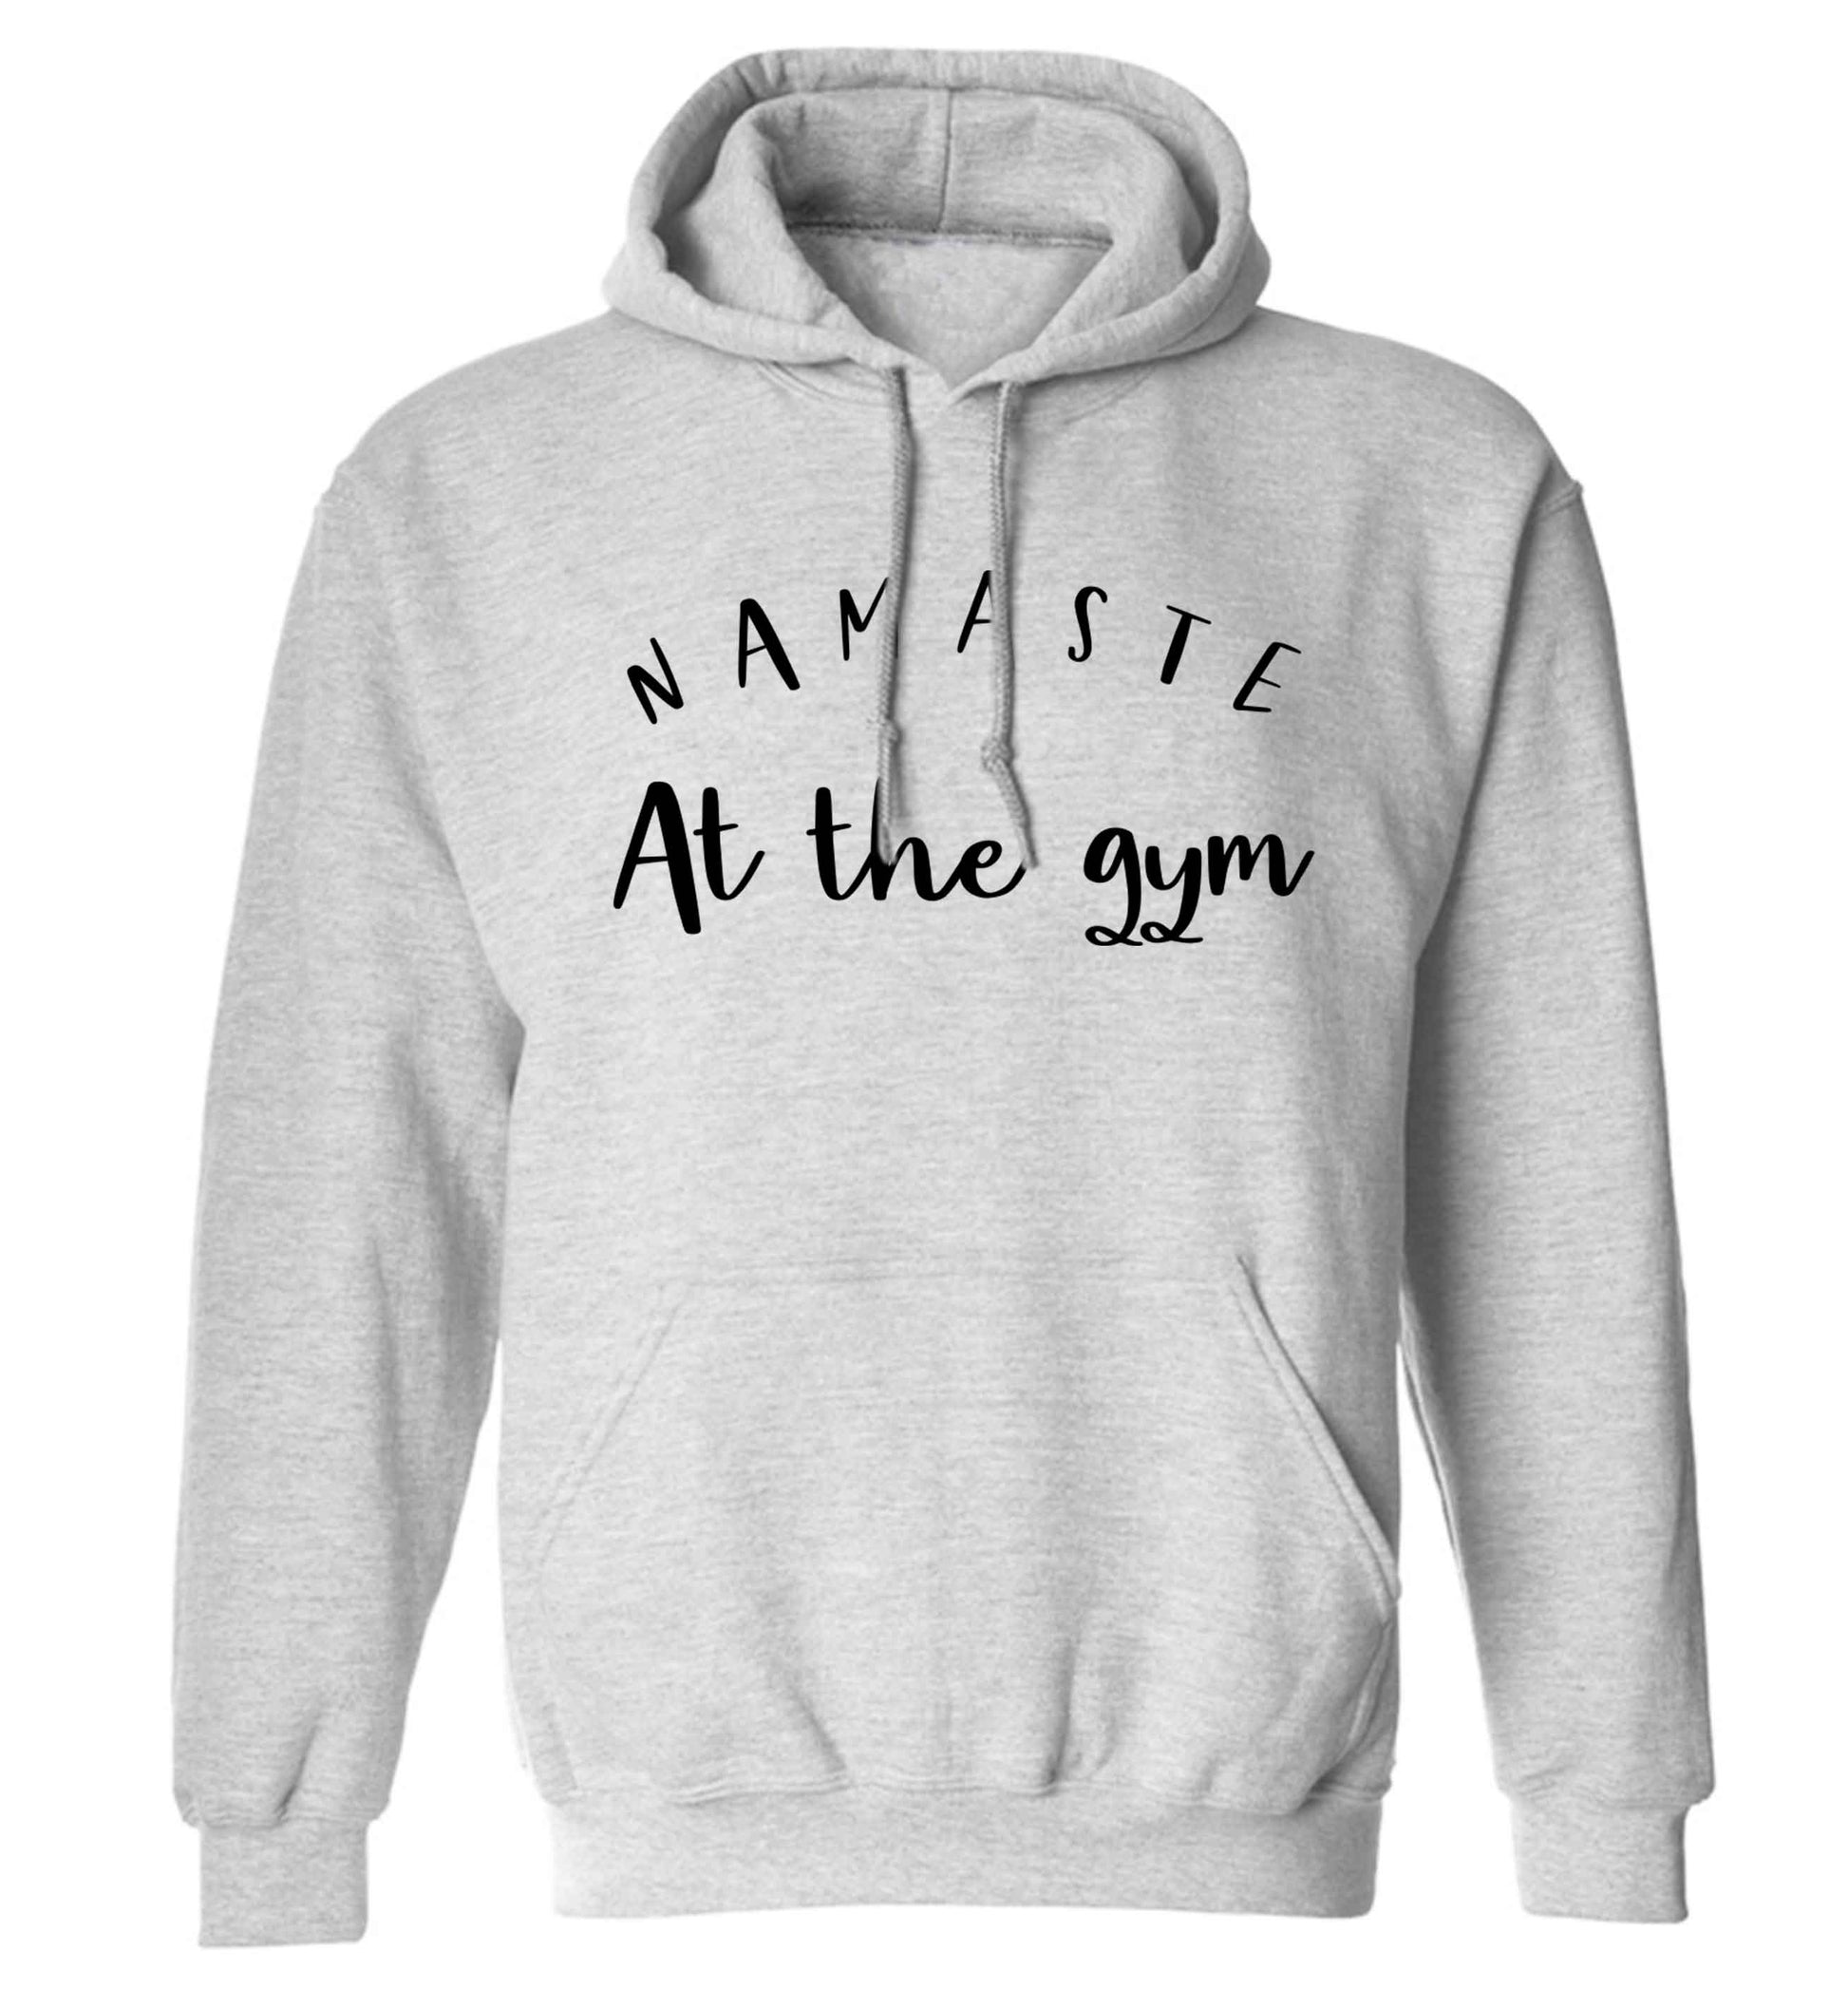 Namaste at the gym adults unisex grey hoodie 2XL